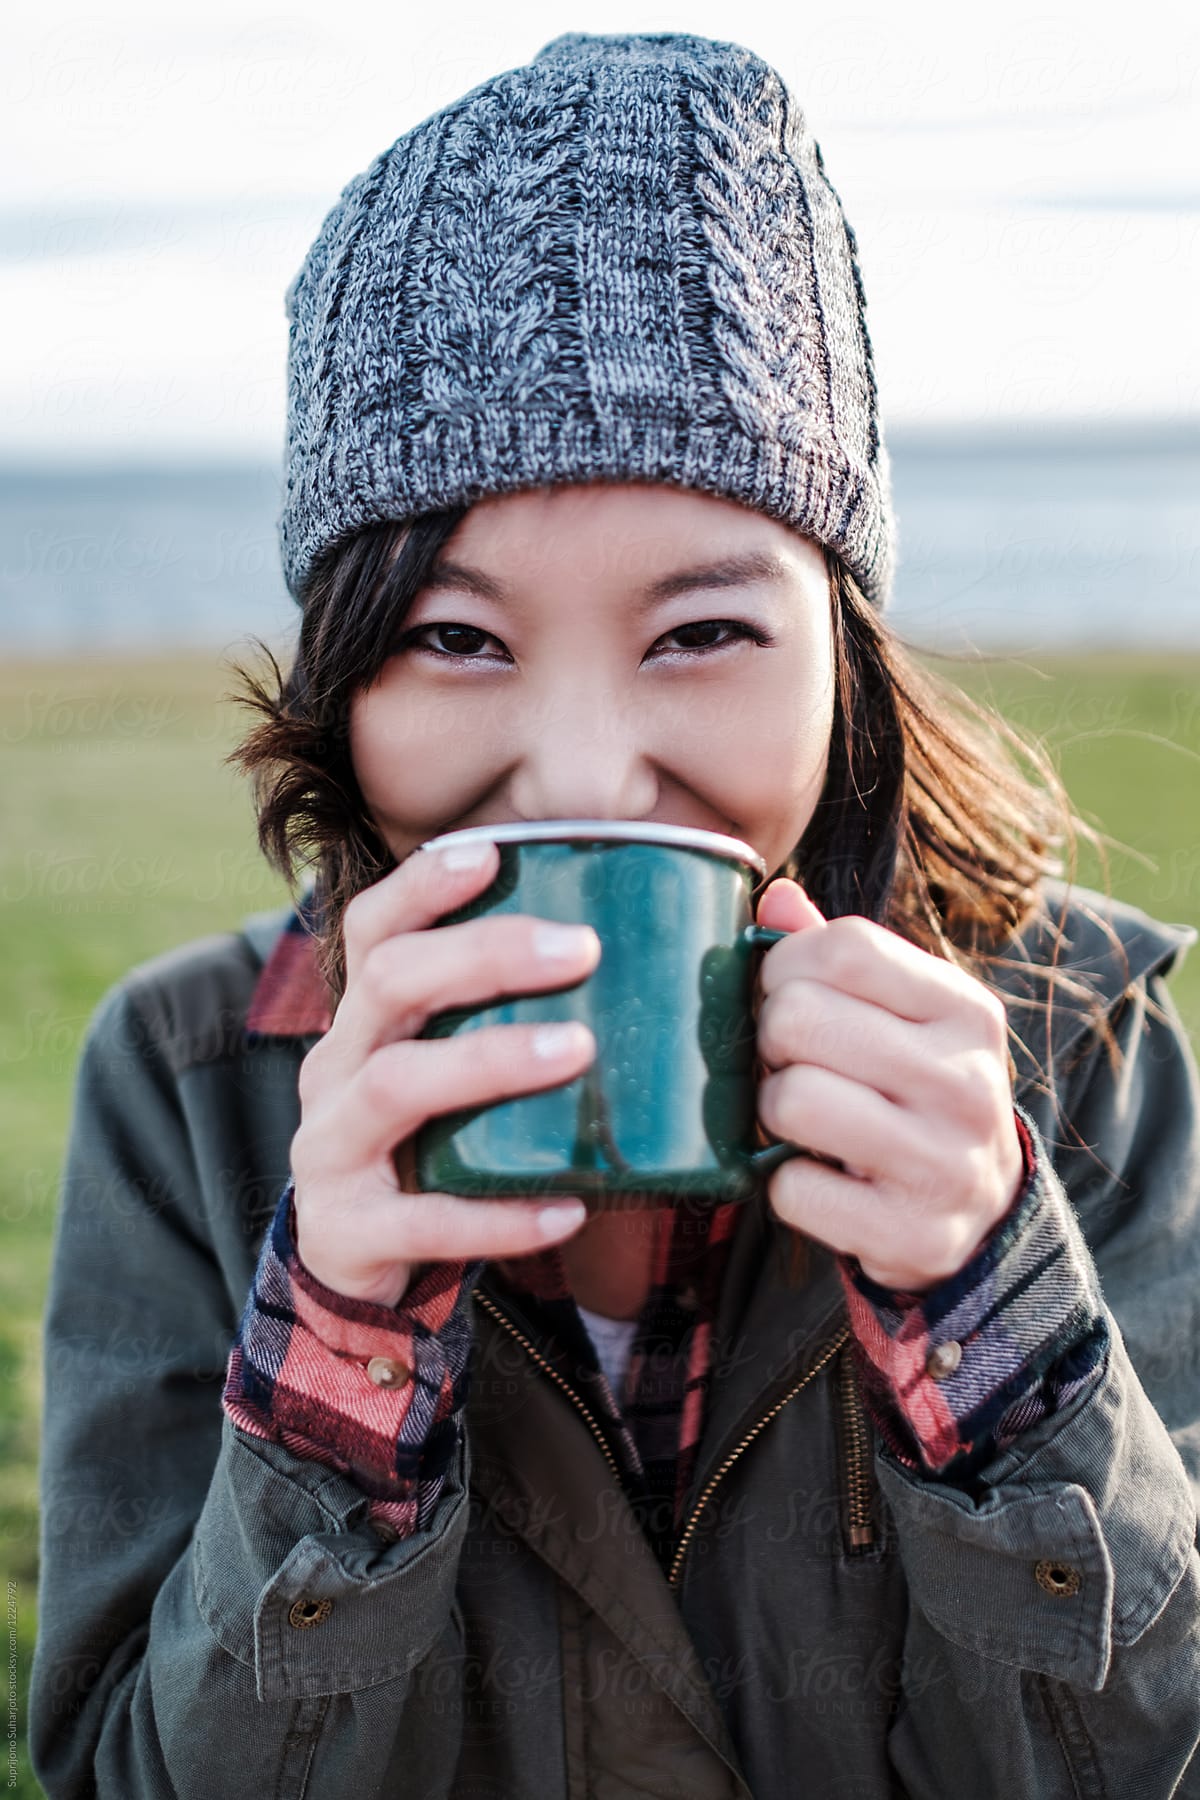 Beautiful Asian woman drinking hot tea in a mug